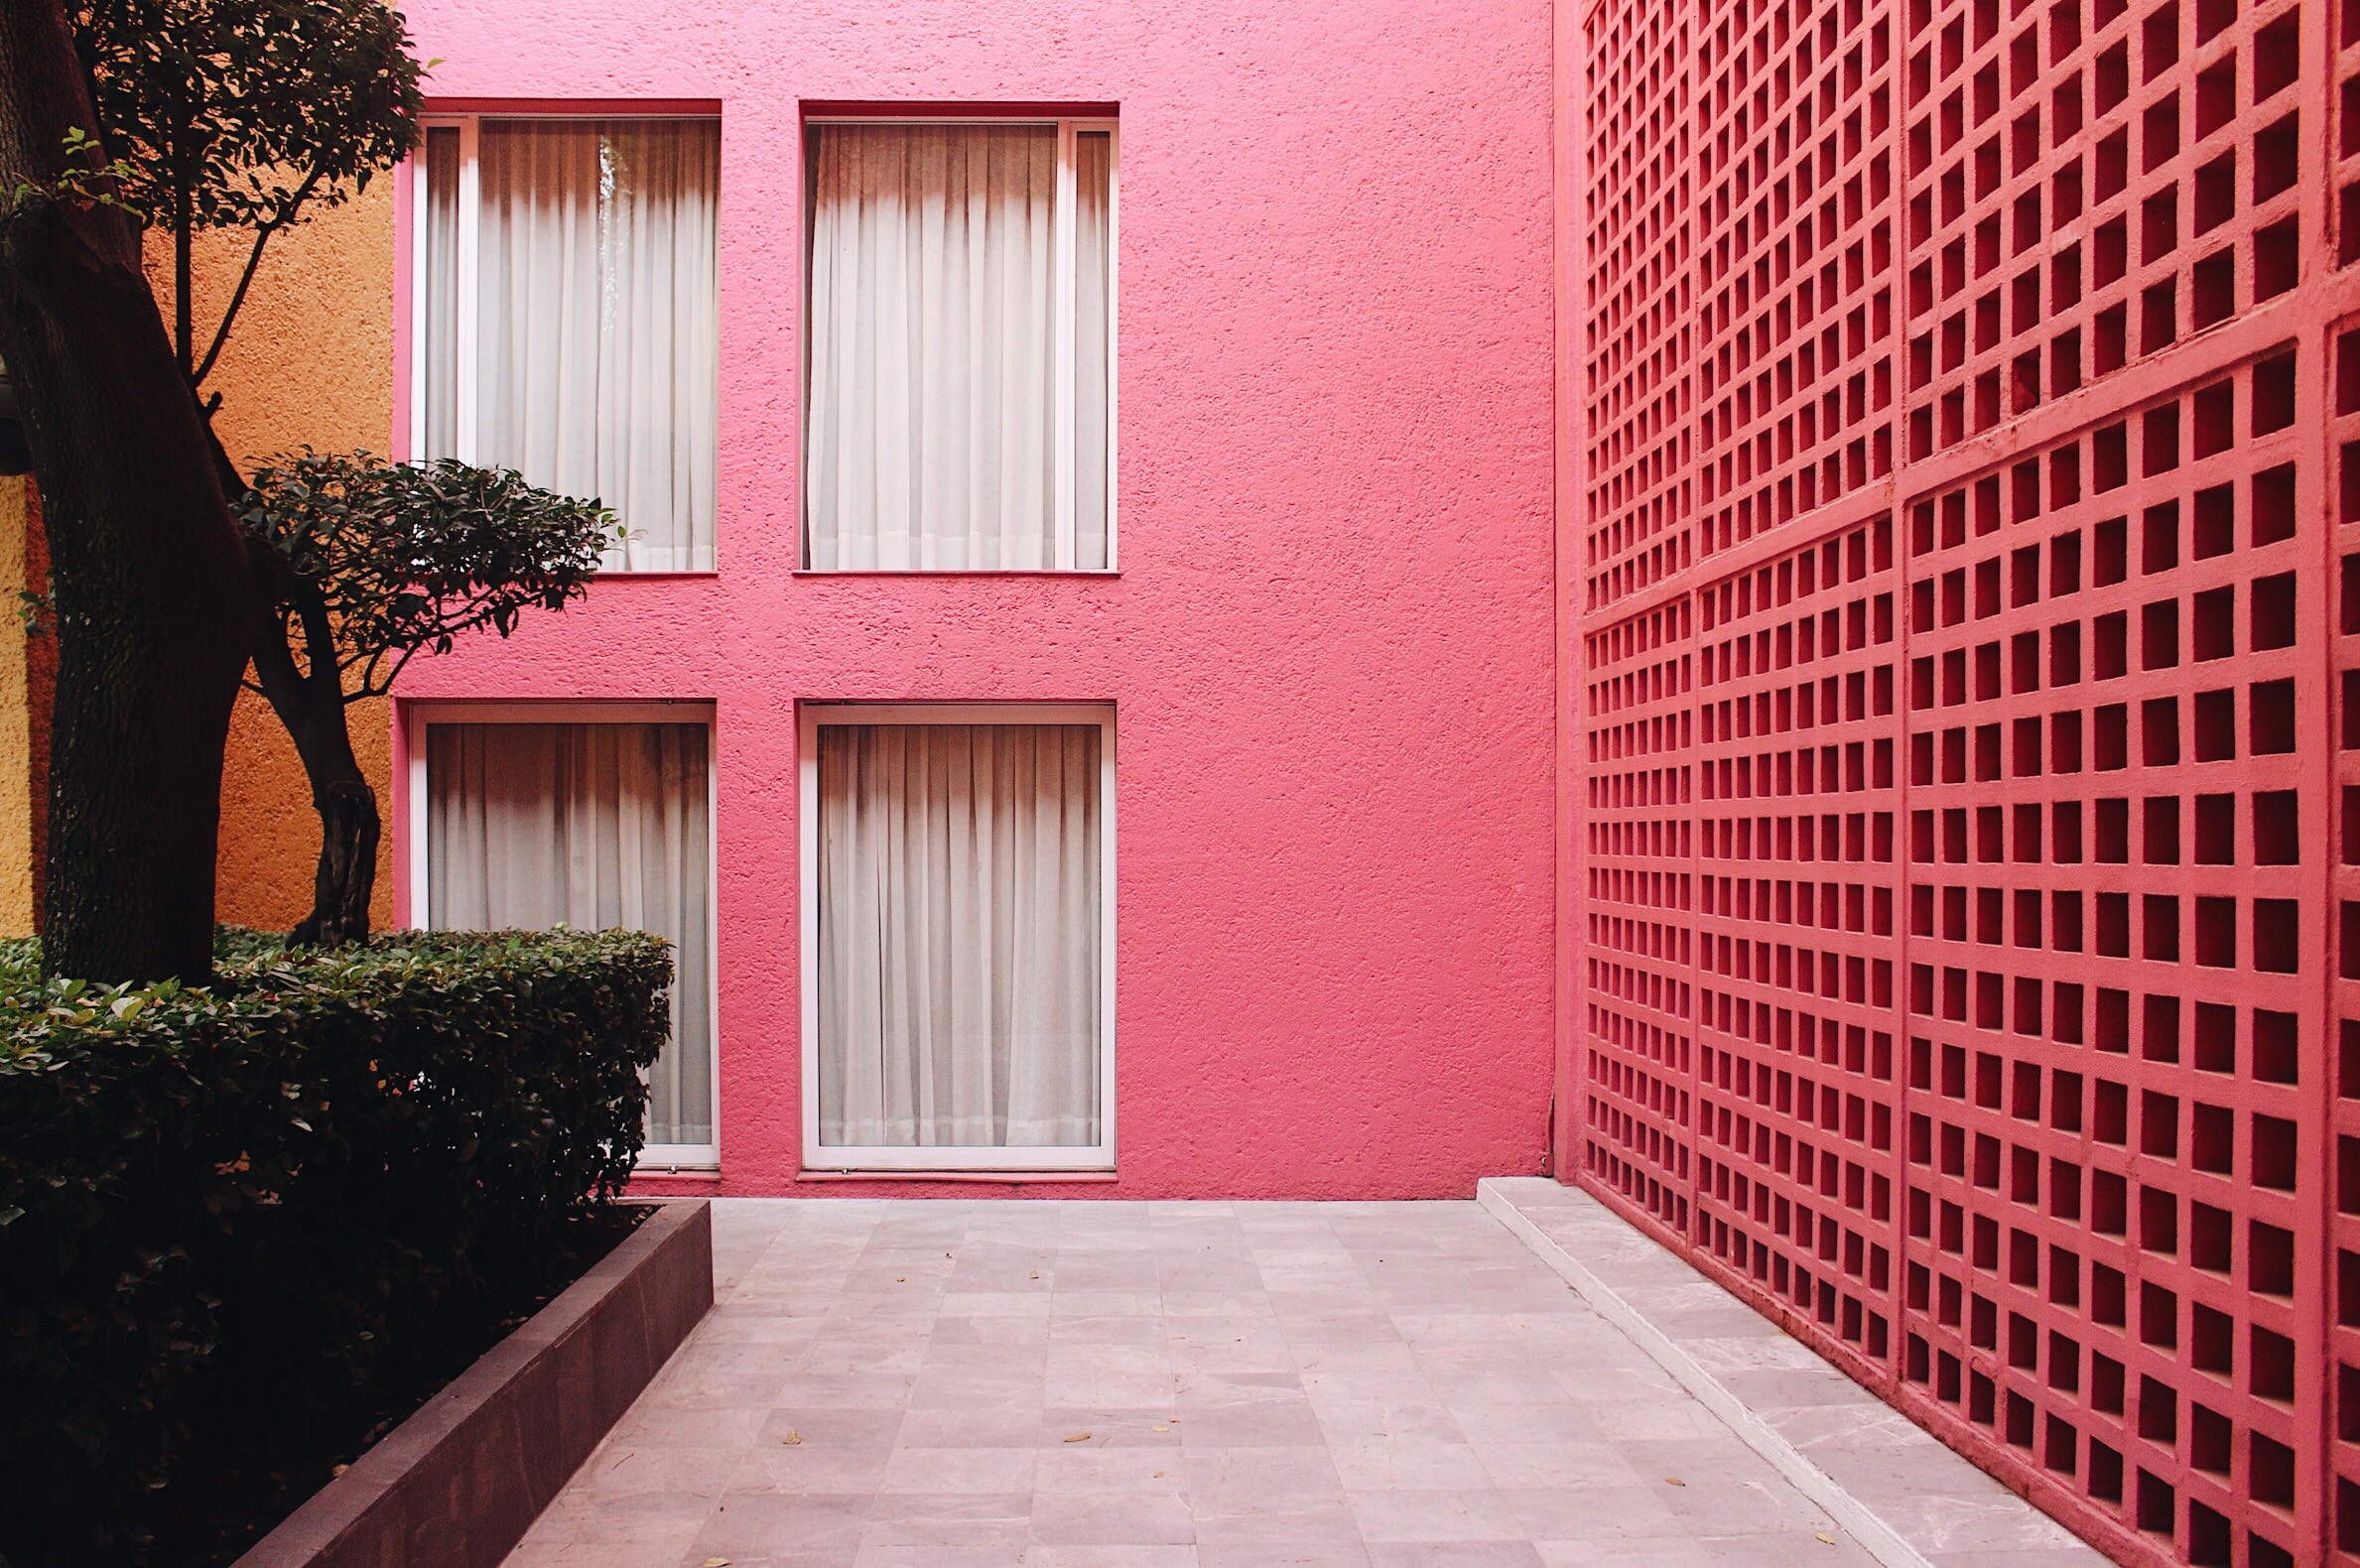  Hotel Camino Real Polanco by Legorreta - México City 